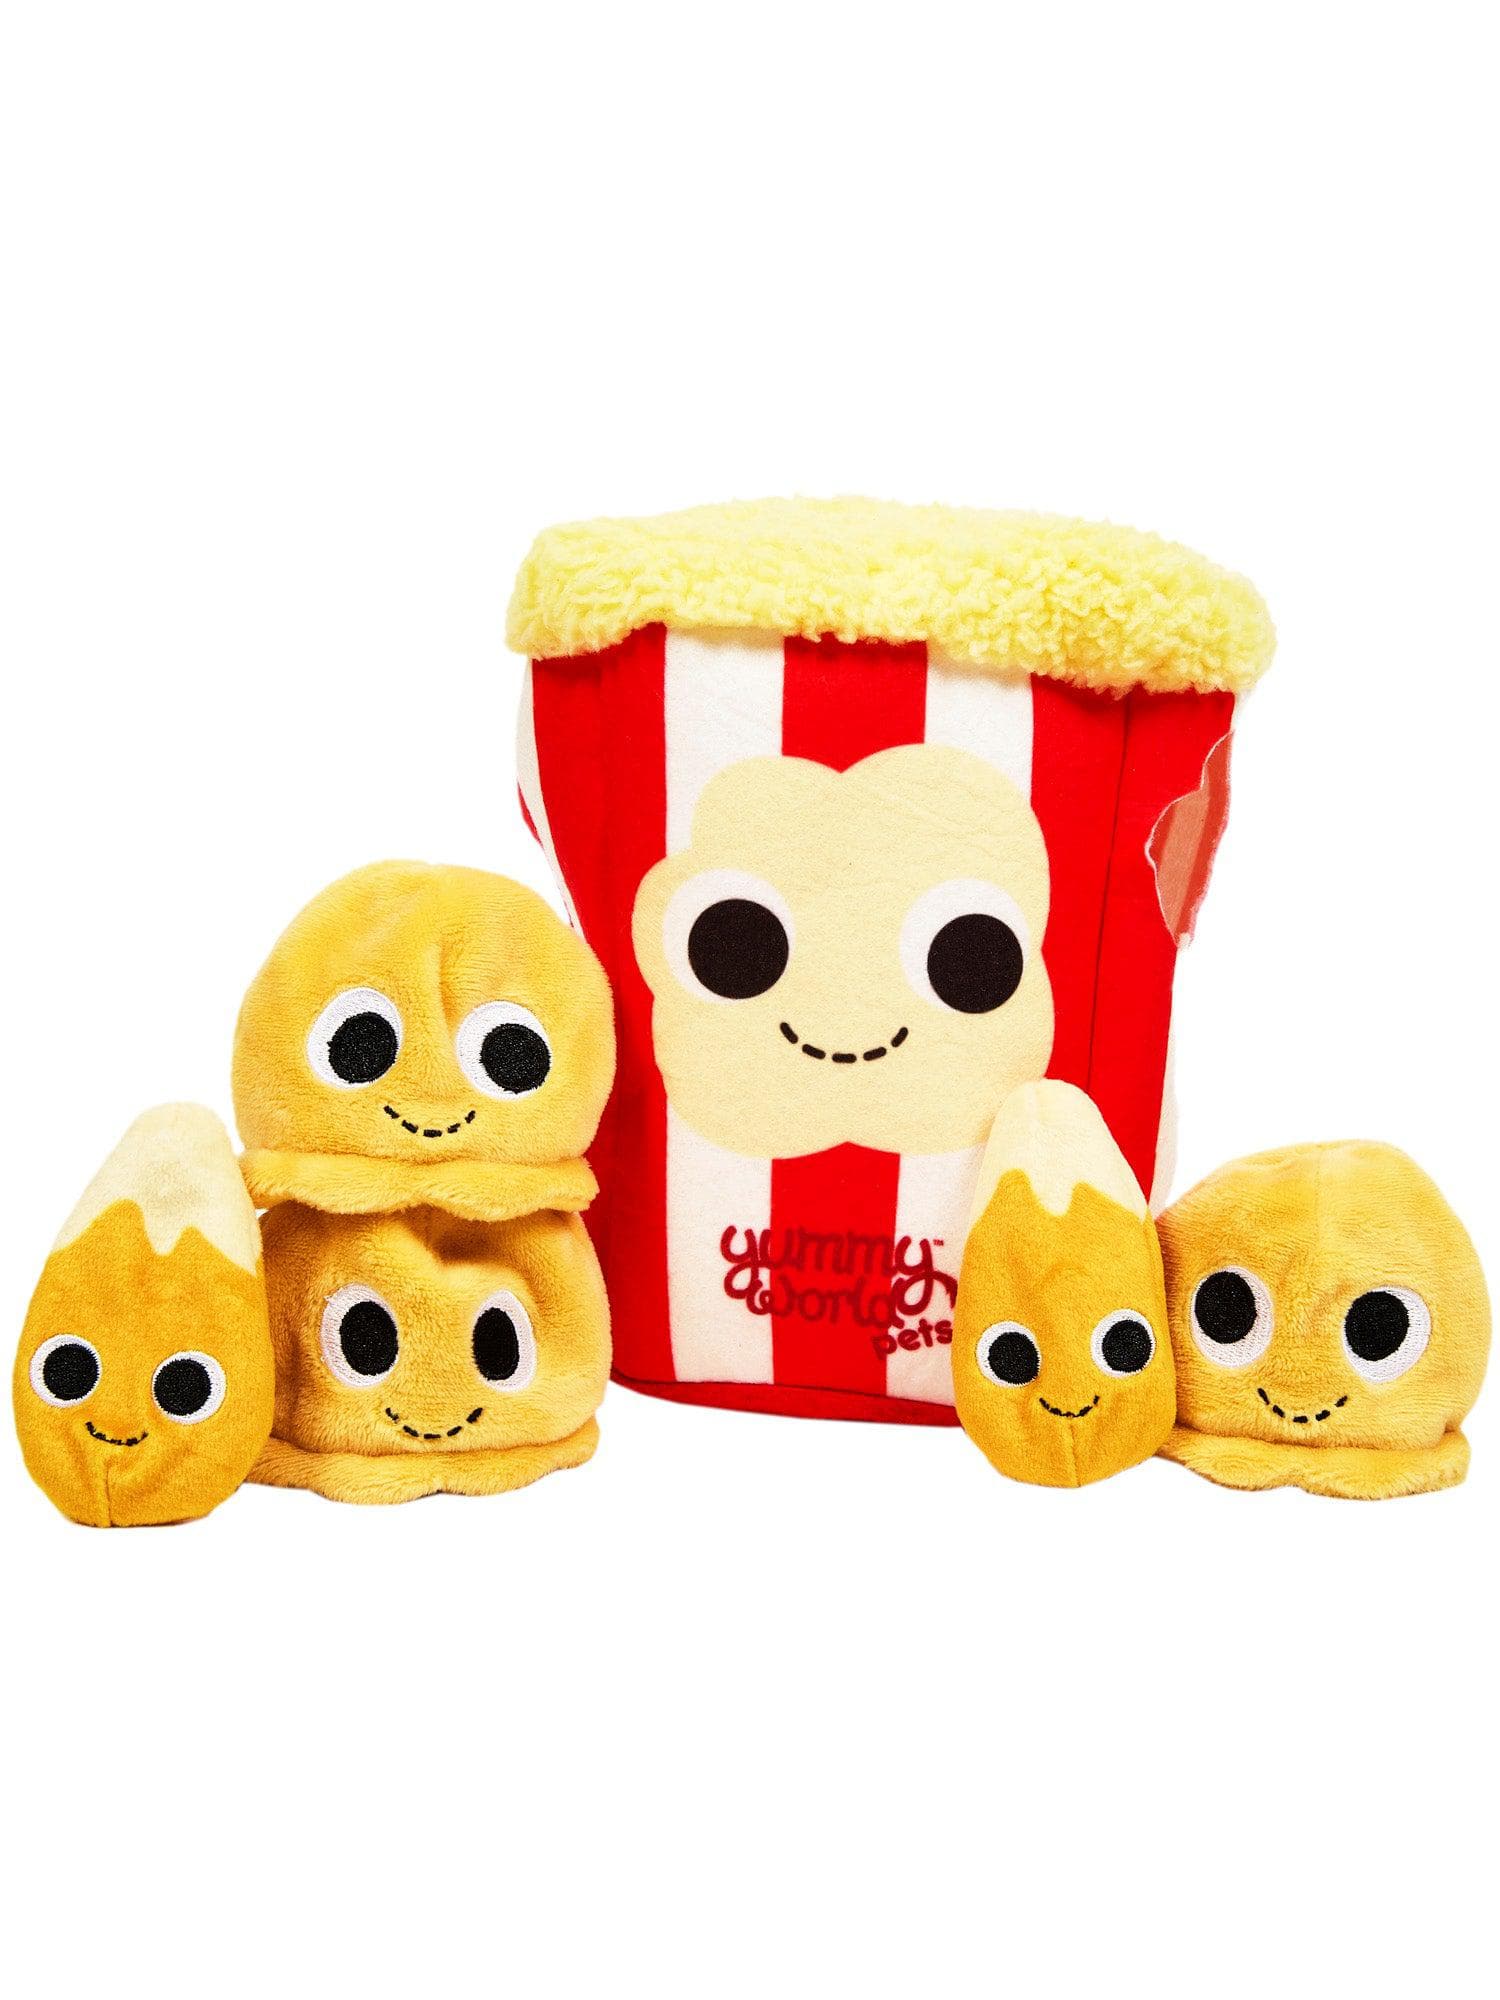 Yummy World Popcorn Pet Toy by Kidrobot - costumes.com